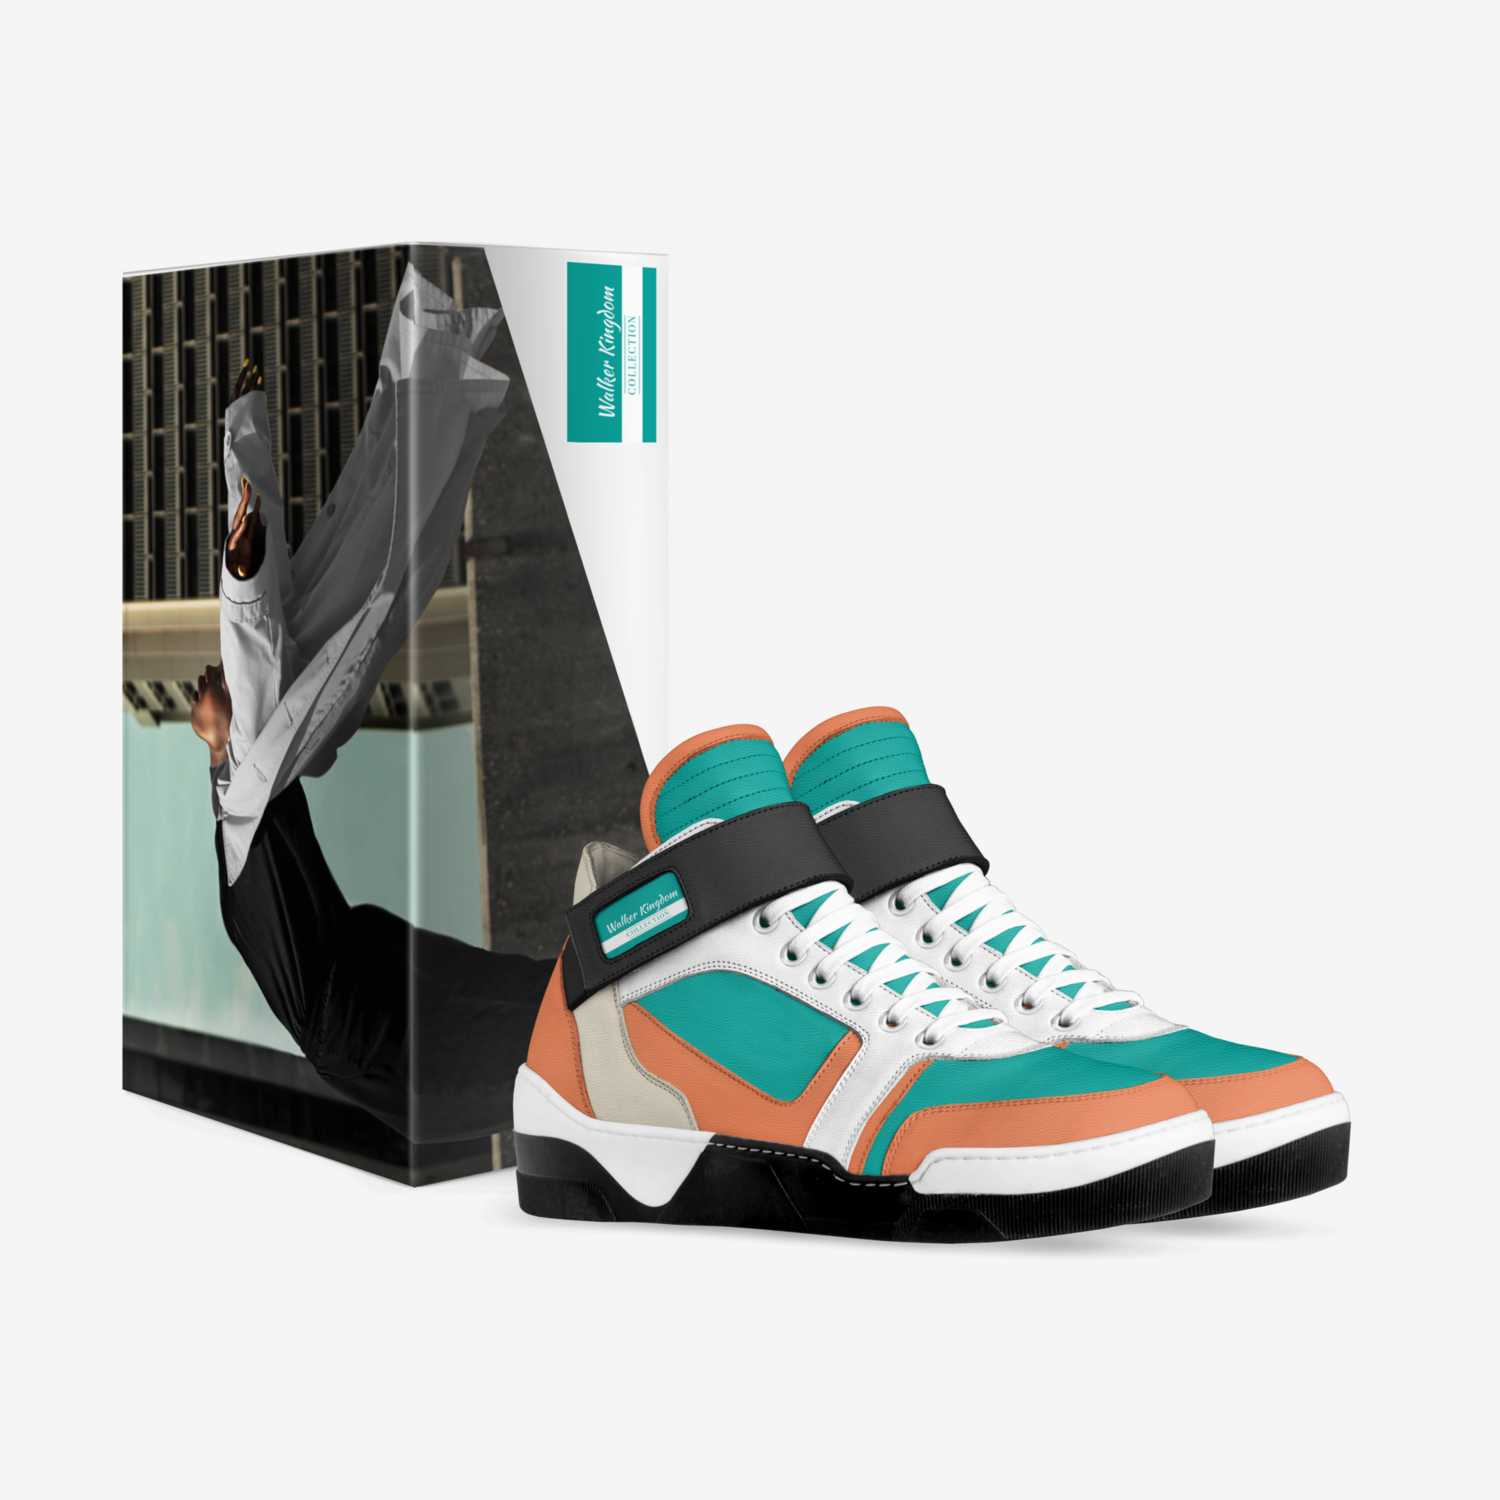 Walker Kingdom custom made in Italy shoes by Breneisha Thurston | Box view